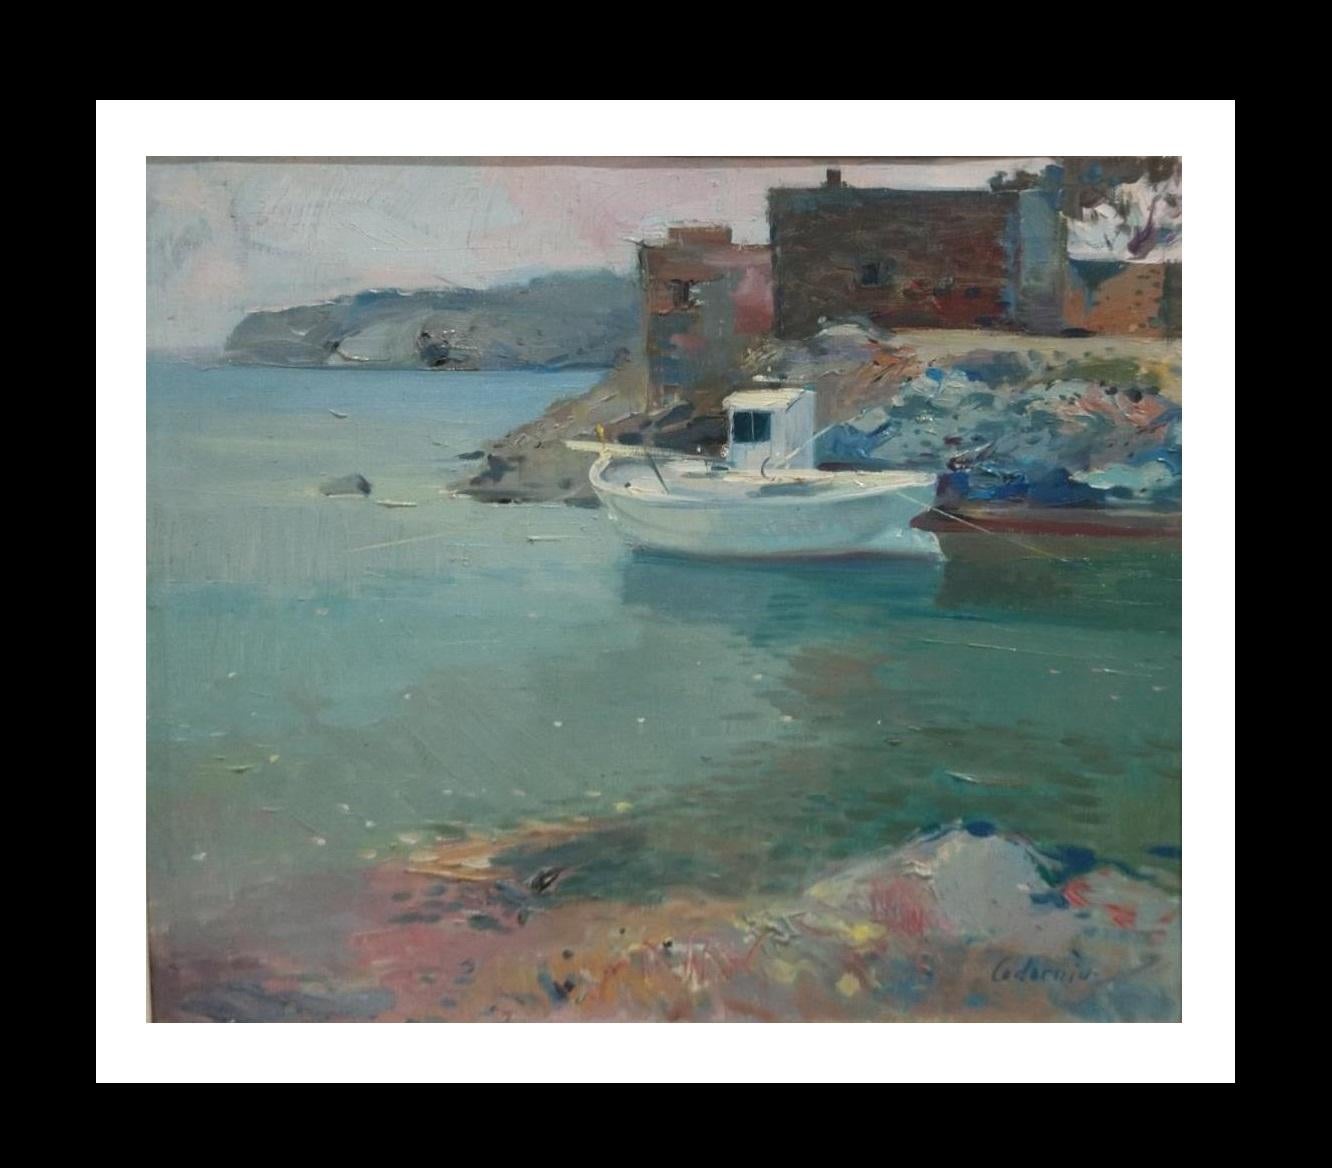  Codorniu  34  Majorca   expressionist acrylic painting